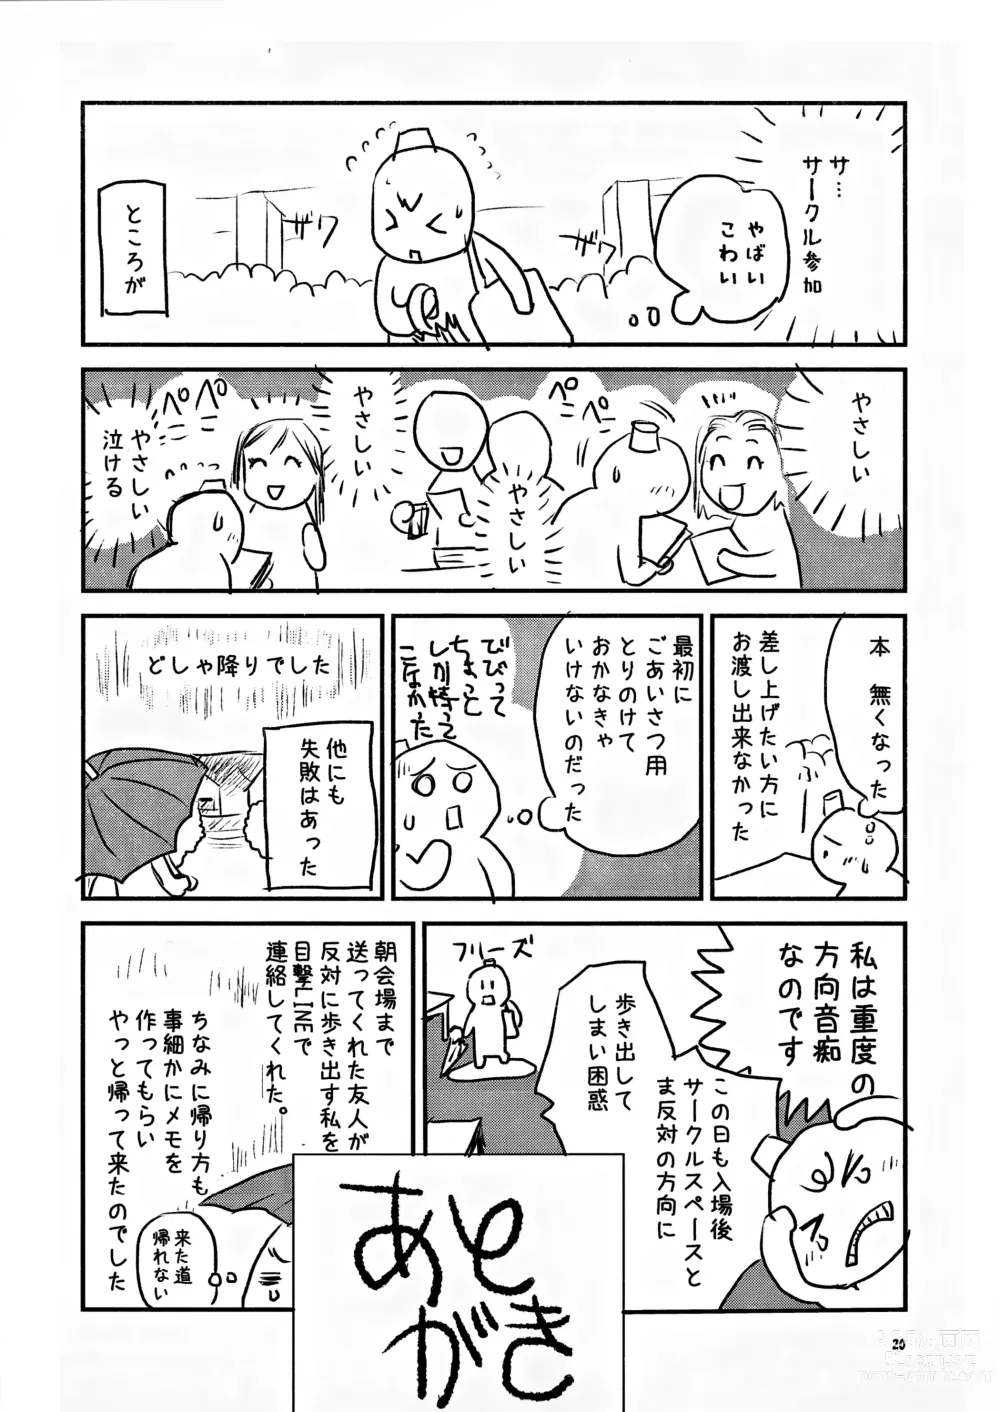 Page 19 of doujinshi poPn Gaming